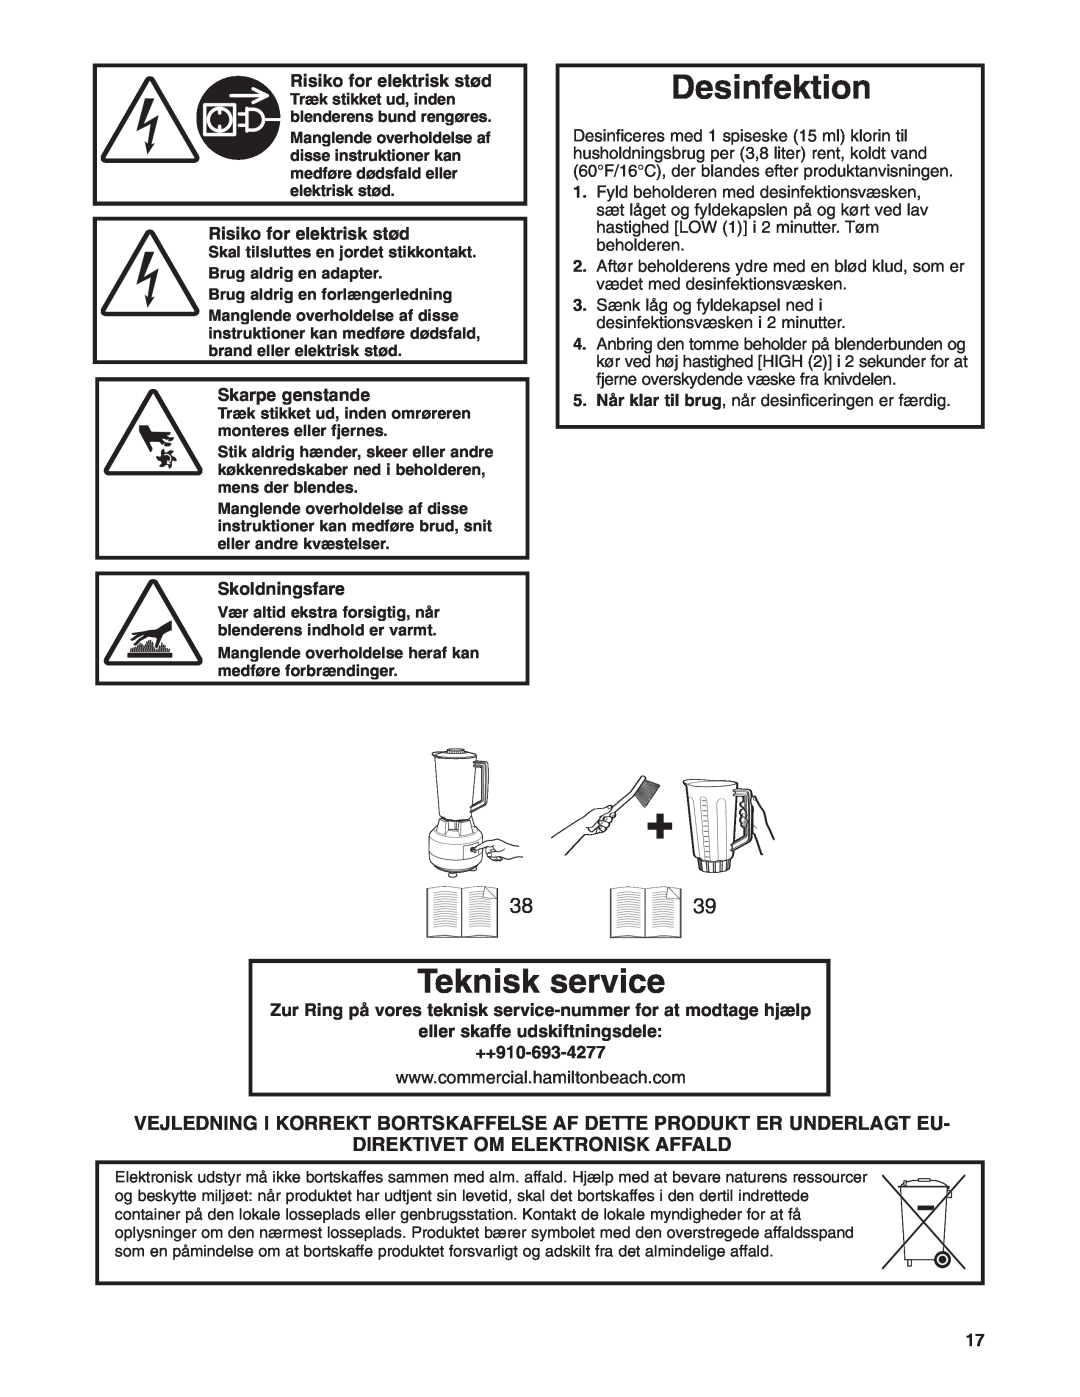 Hamilton Beach 908 Series Teknisk service, Desinfektion, Direktivet Om Elektronisk Affald, Risiko for elektrisk stød 